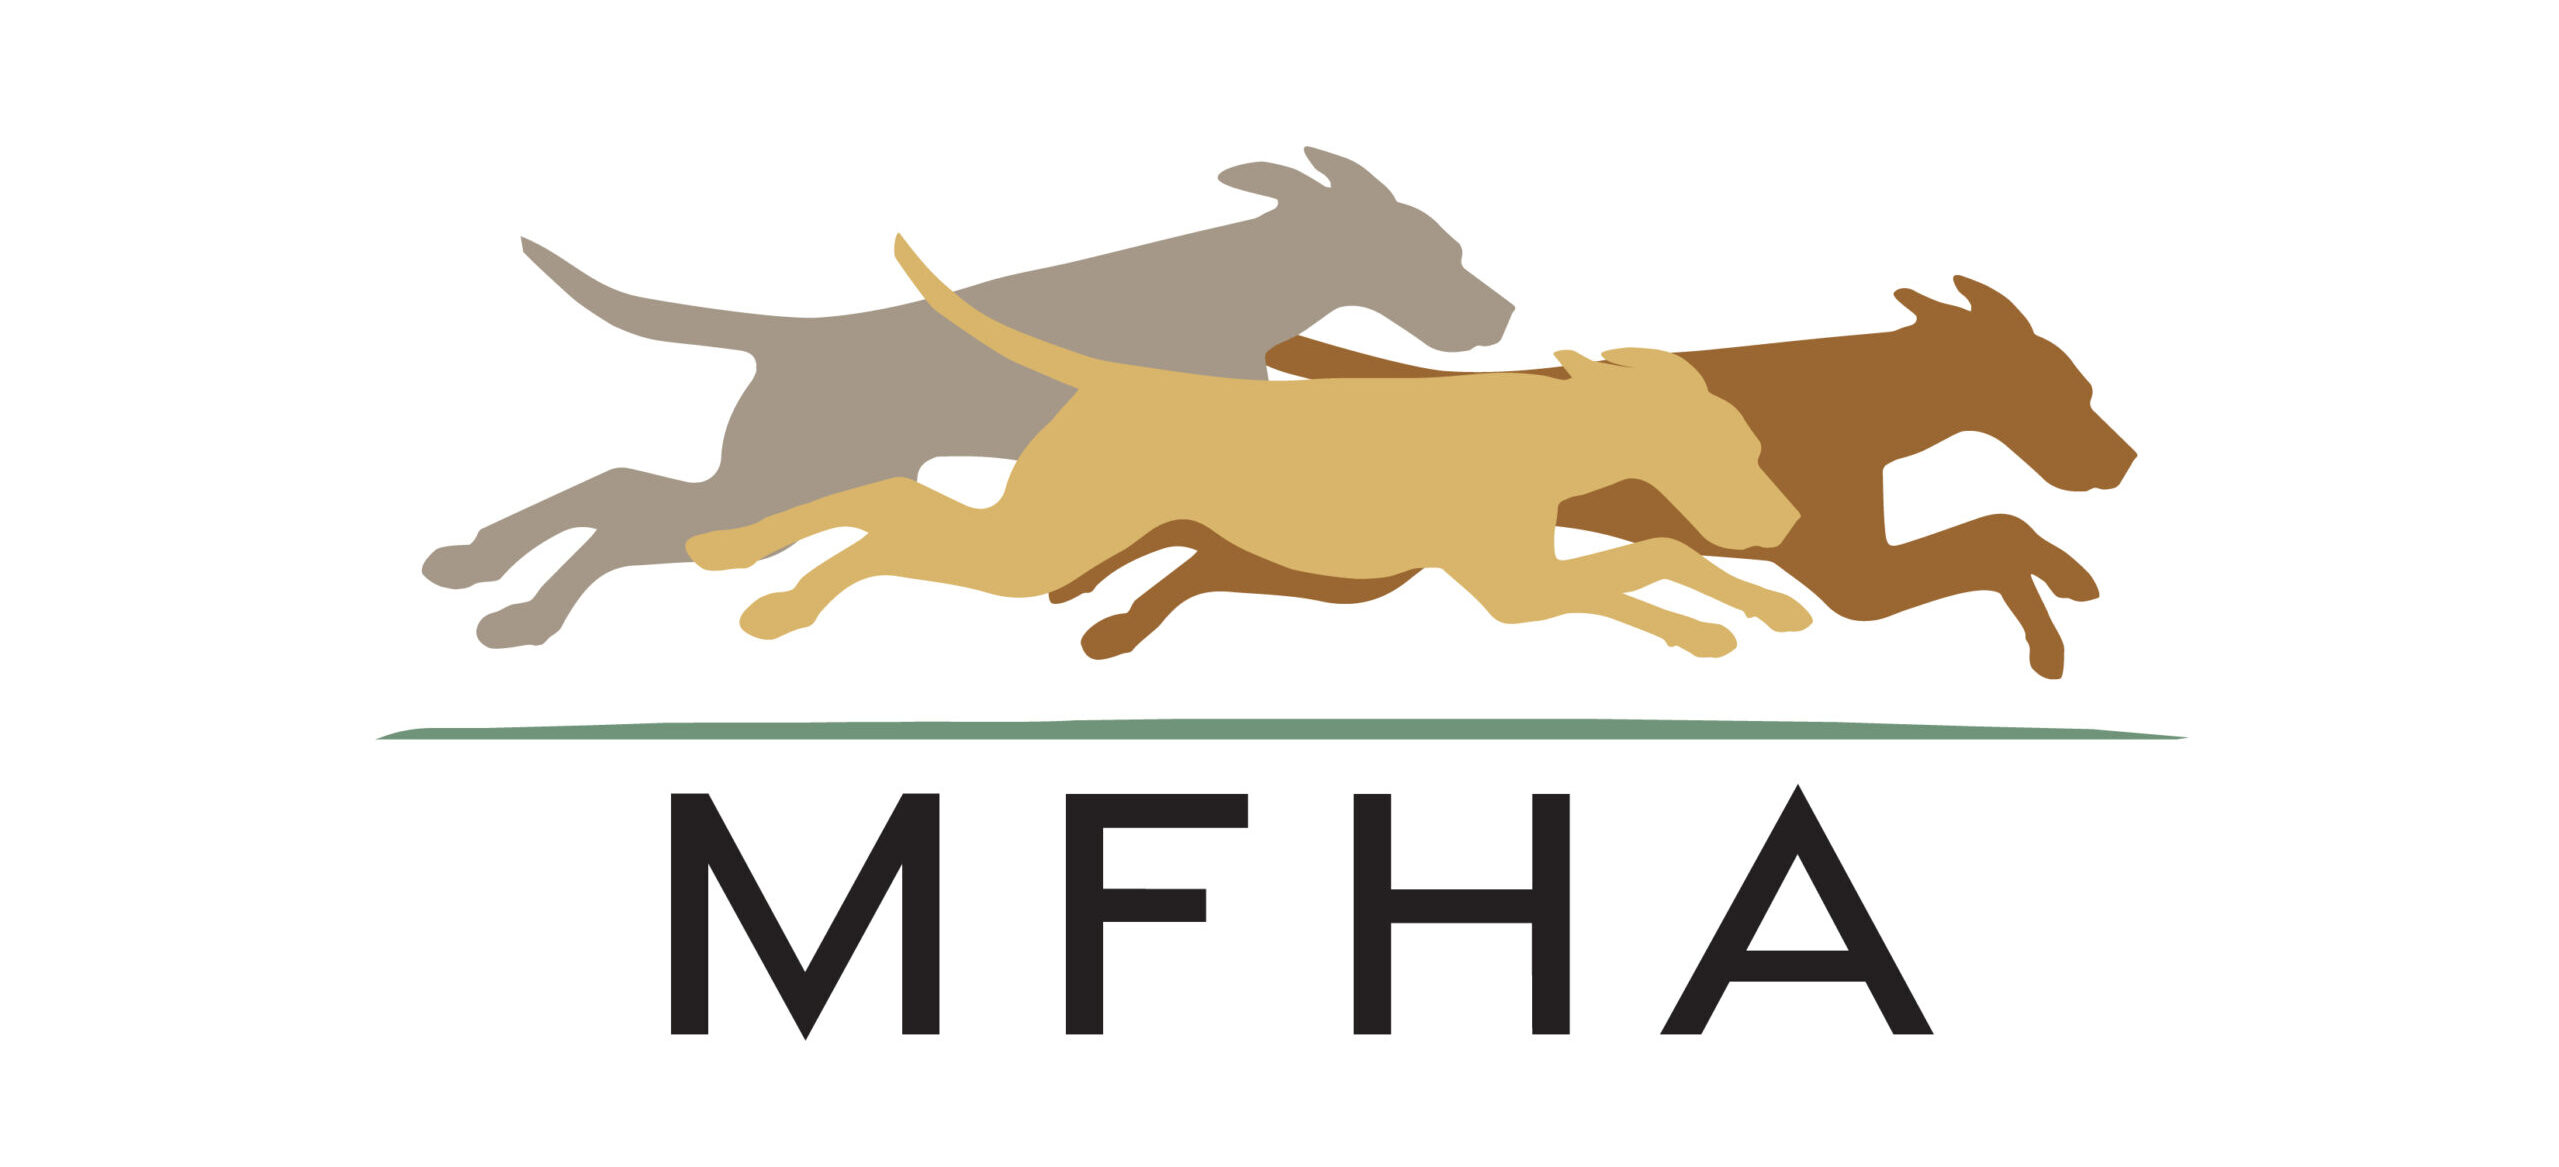 MFHA Logo